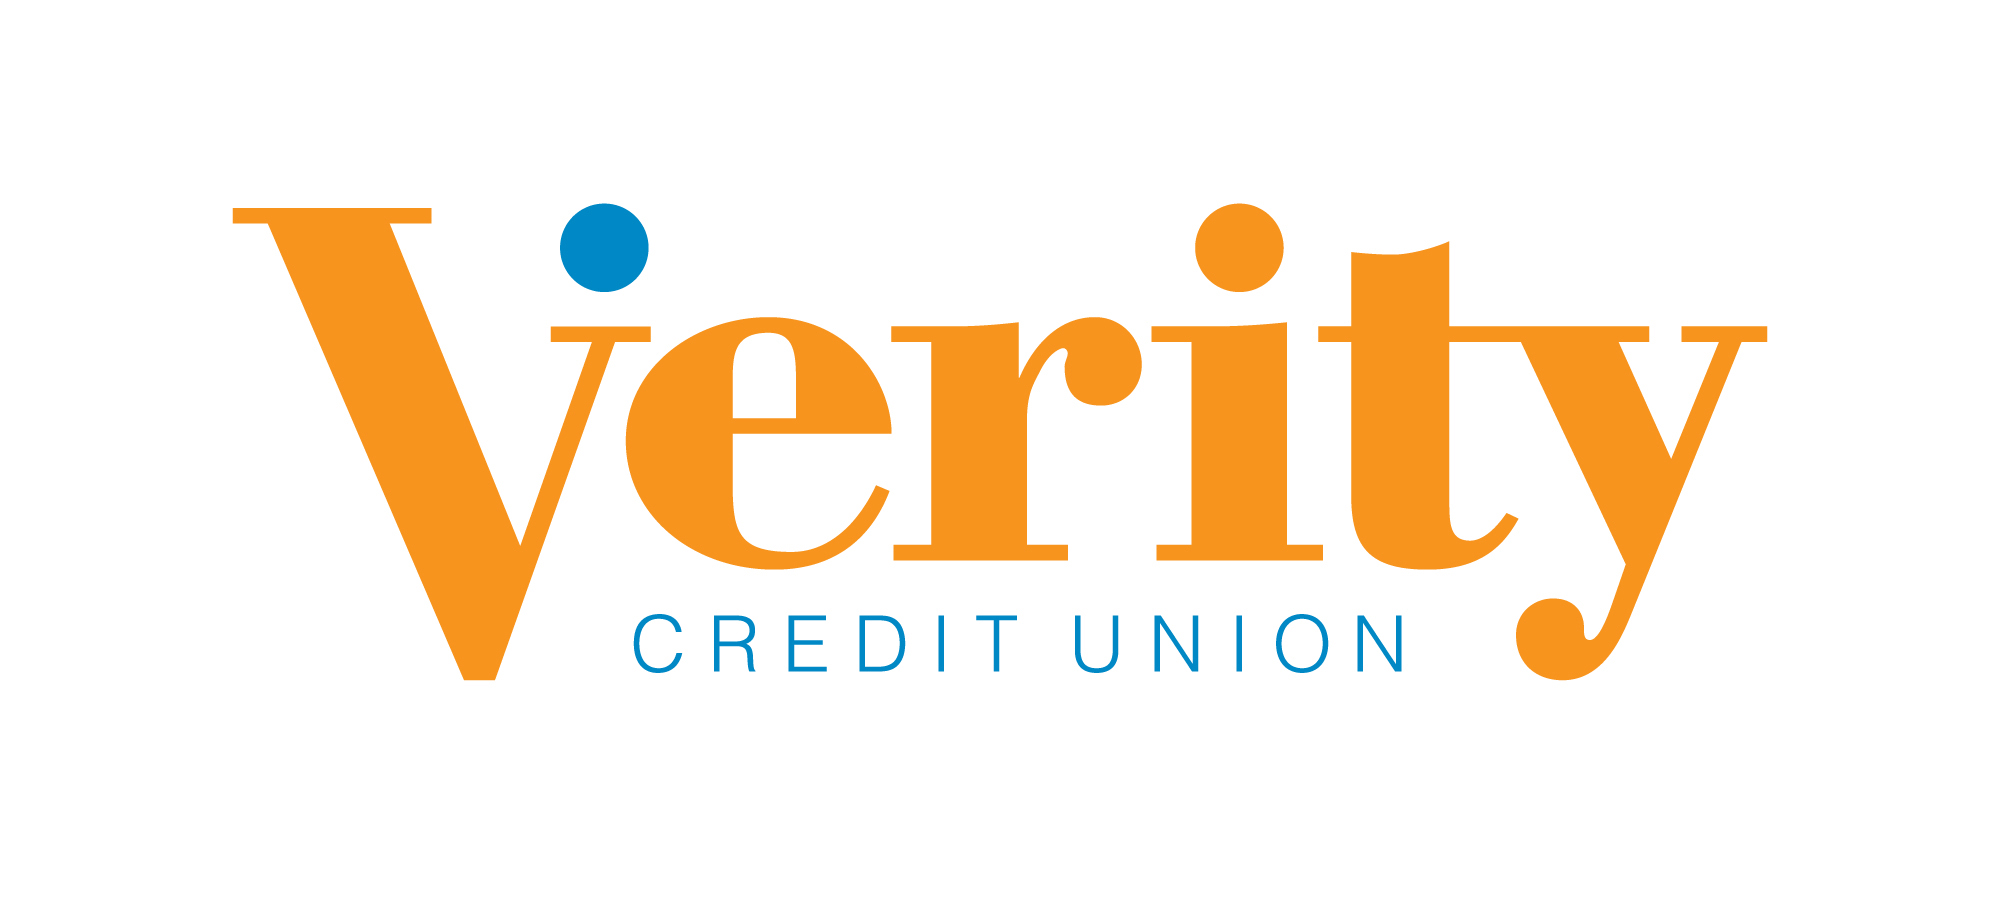 Verity Credit Union Small